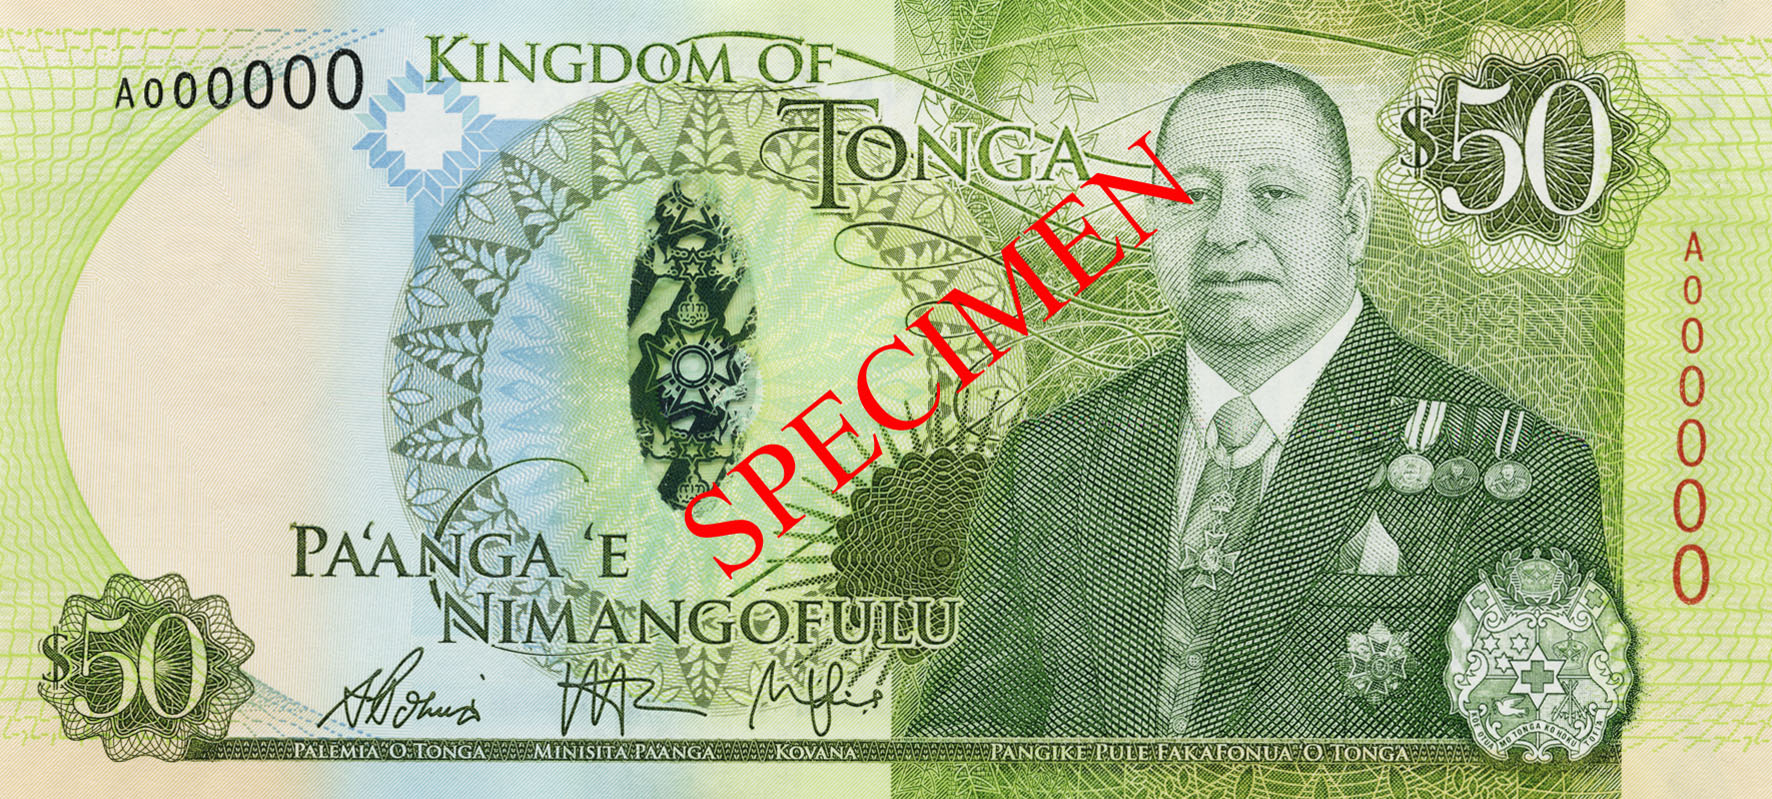 Tonga-50-2015-Specimen-front300dpi